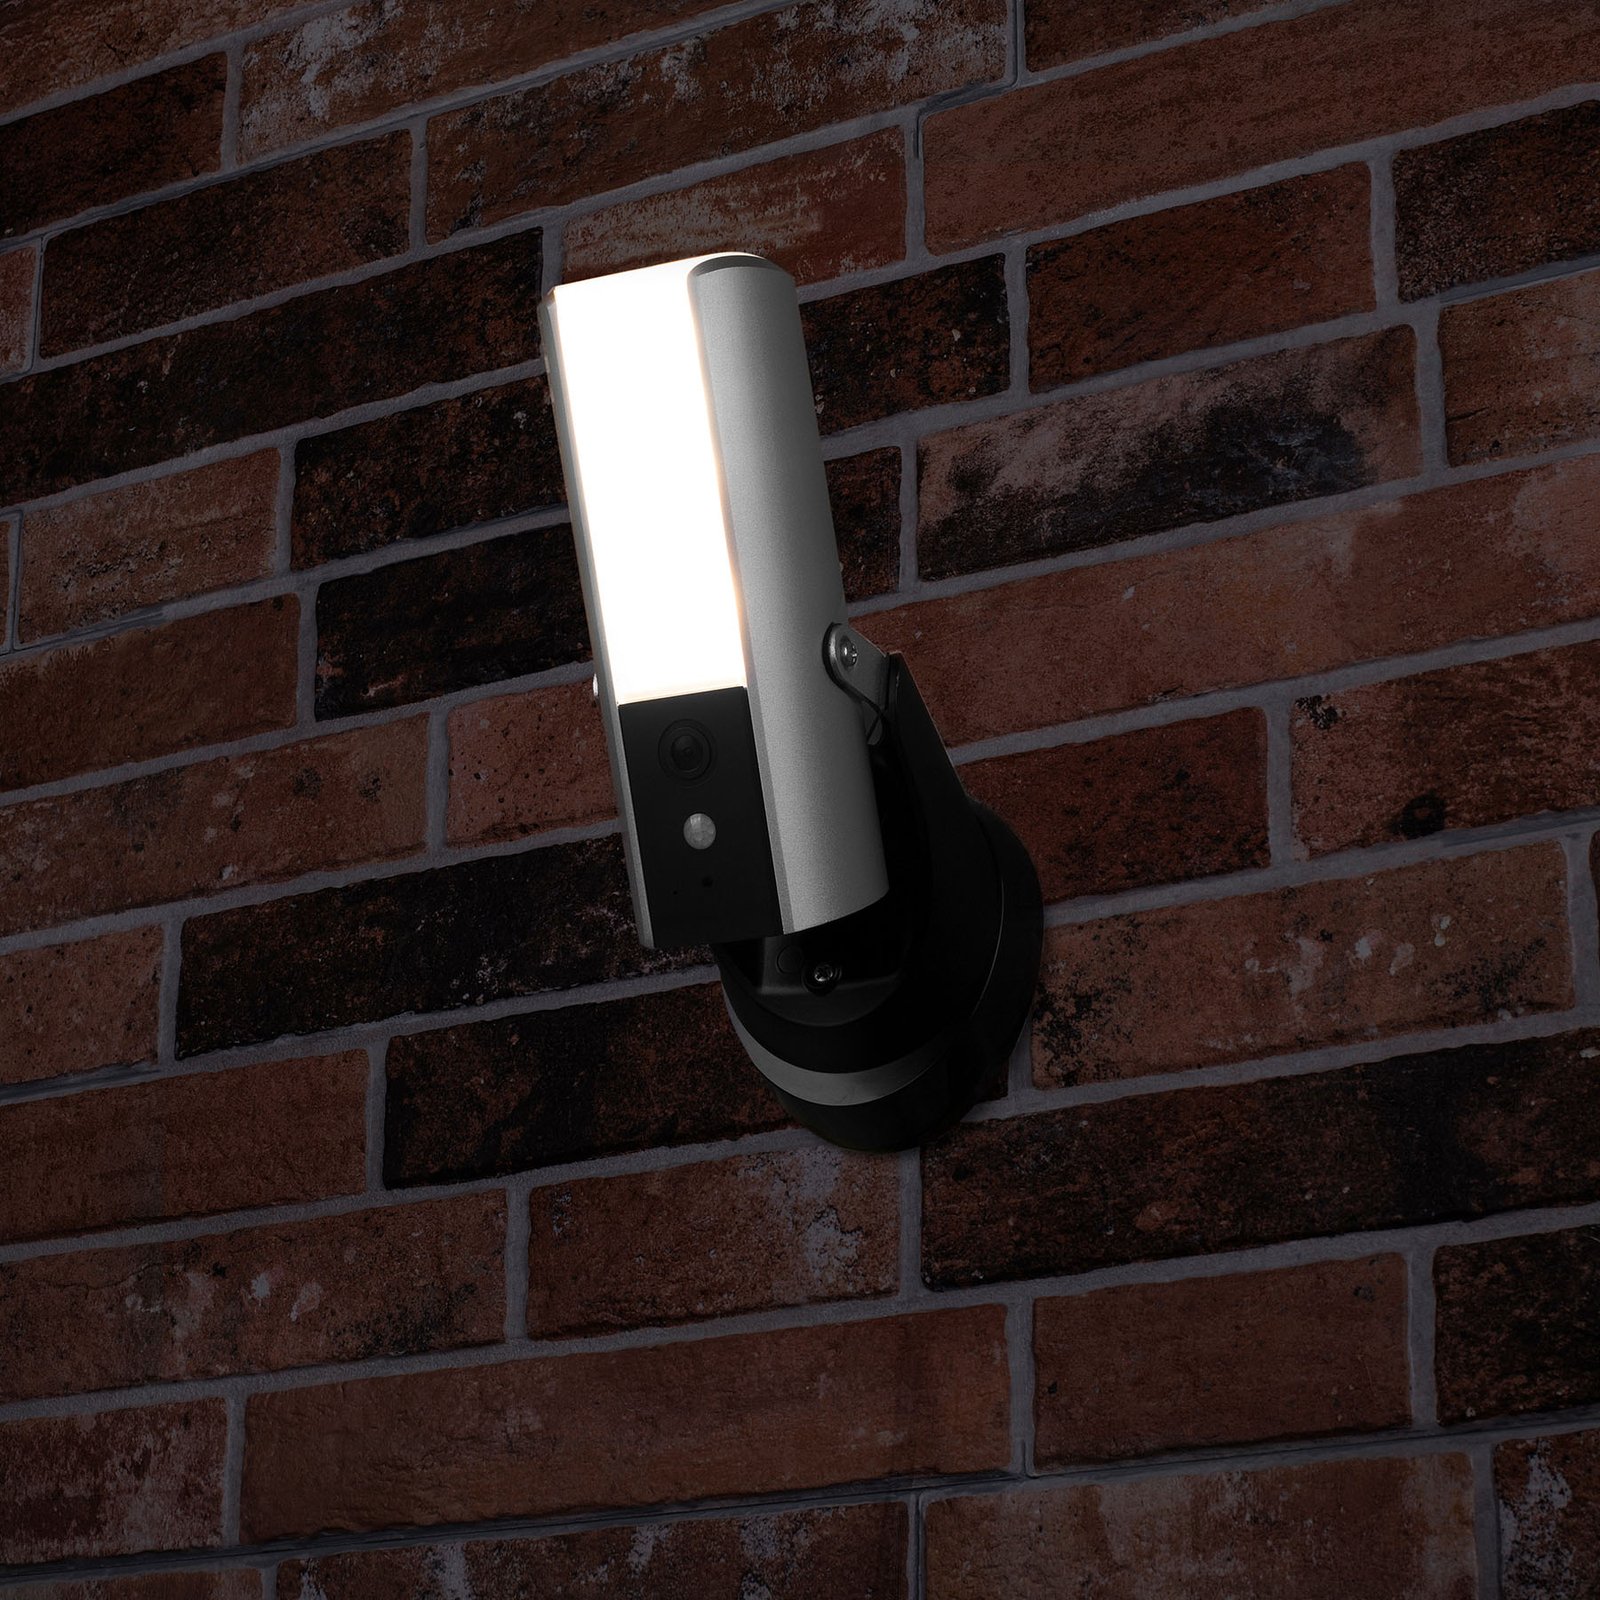 Guardian surveillance camera with an LED light